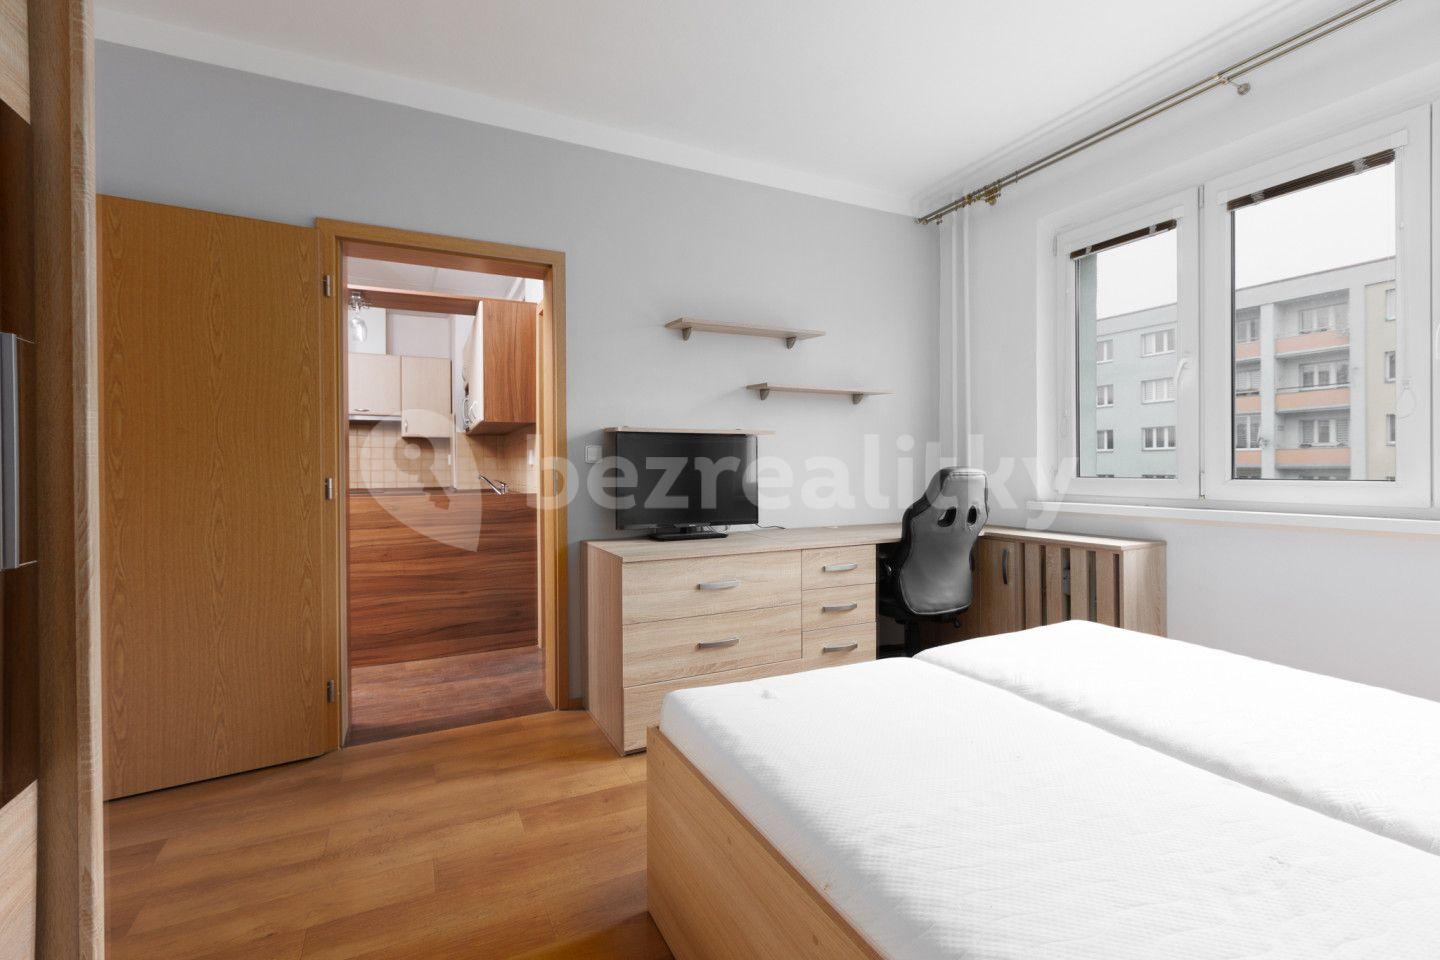 2 bedroom flat for sale, 64 m², Zdeňka Fibicha, Most, Ústecký Region